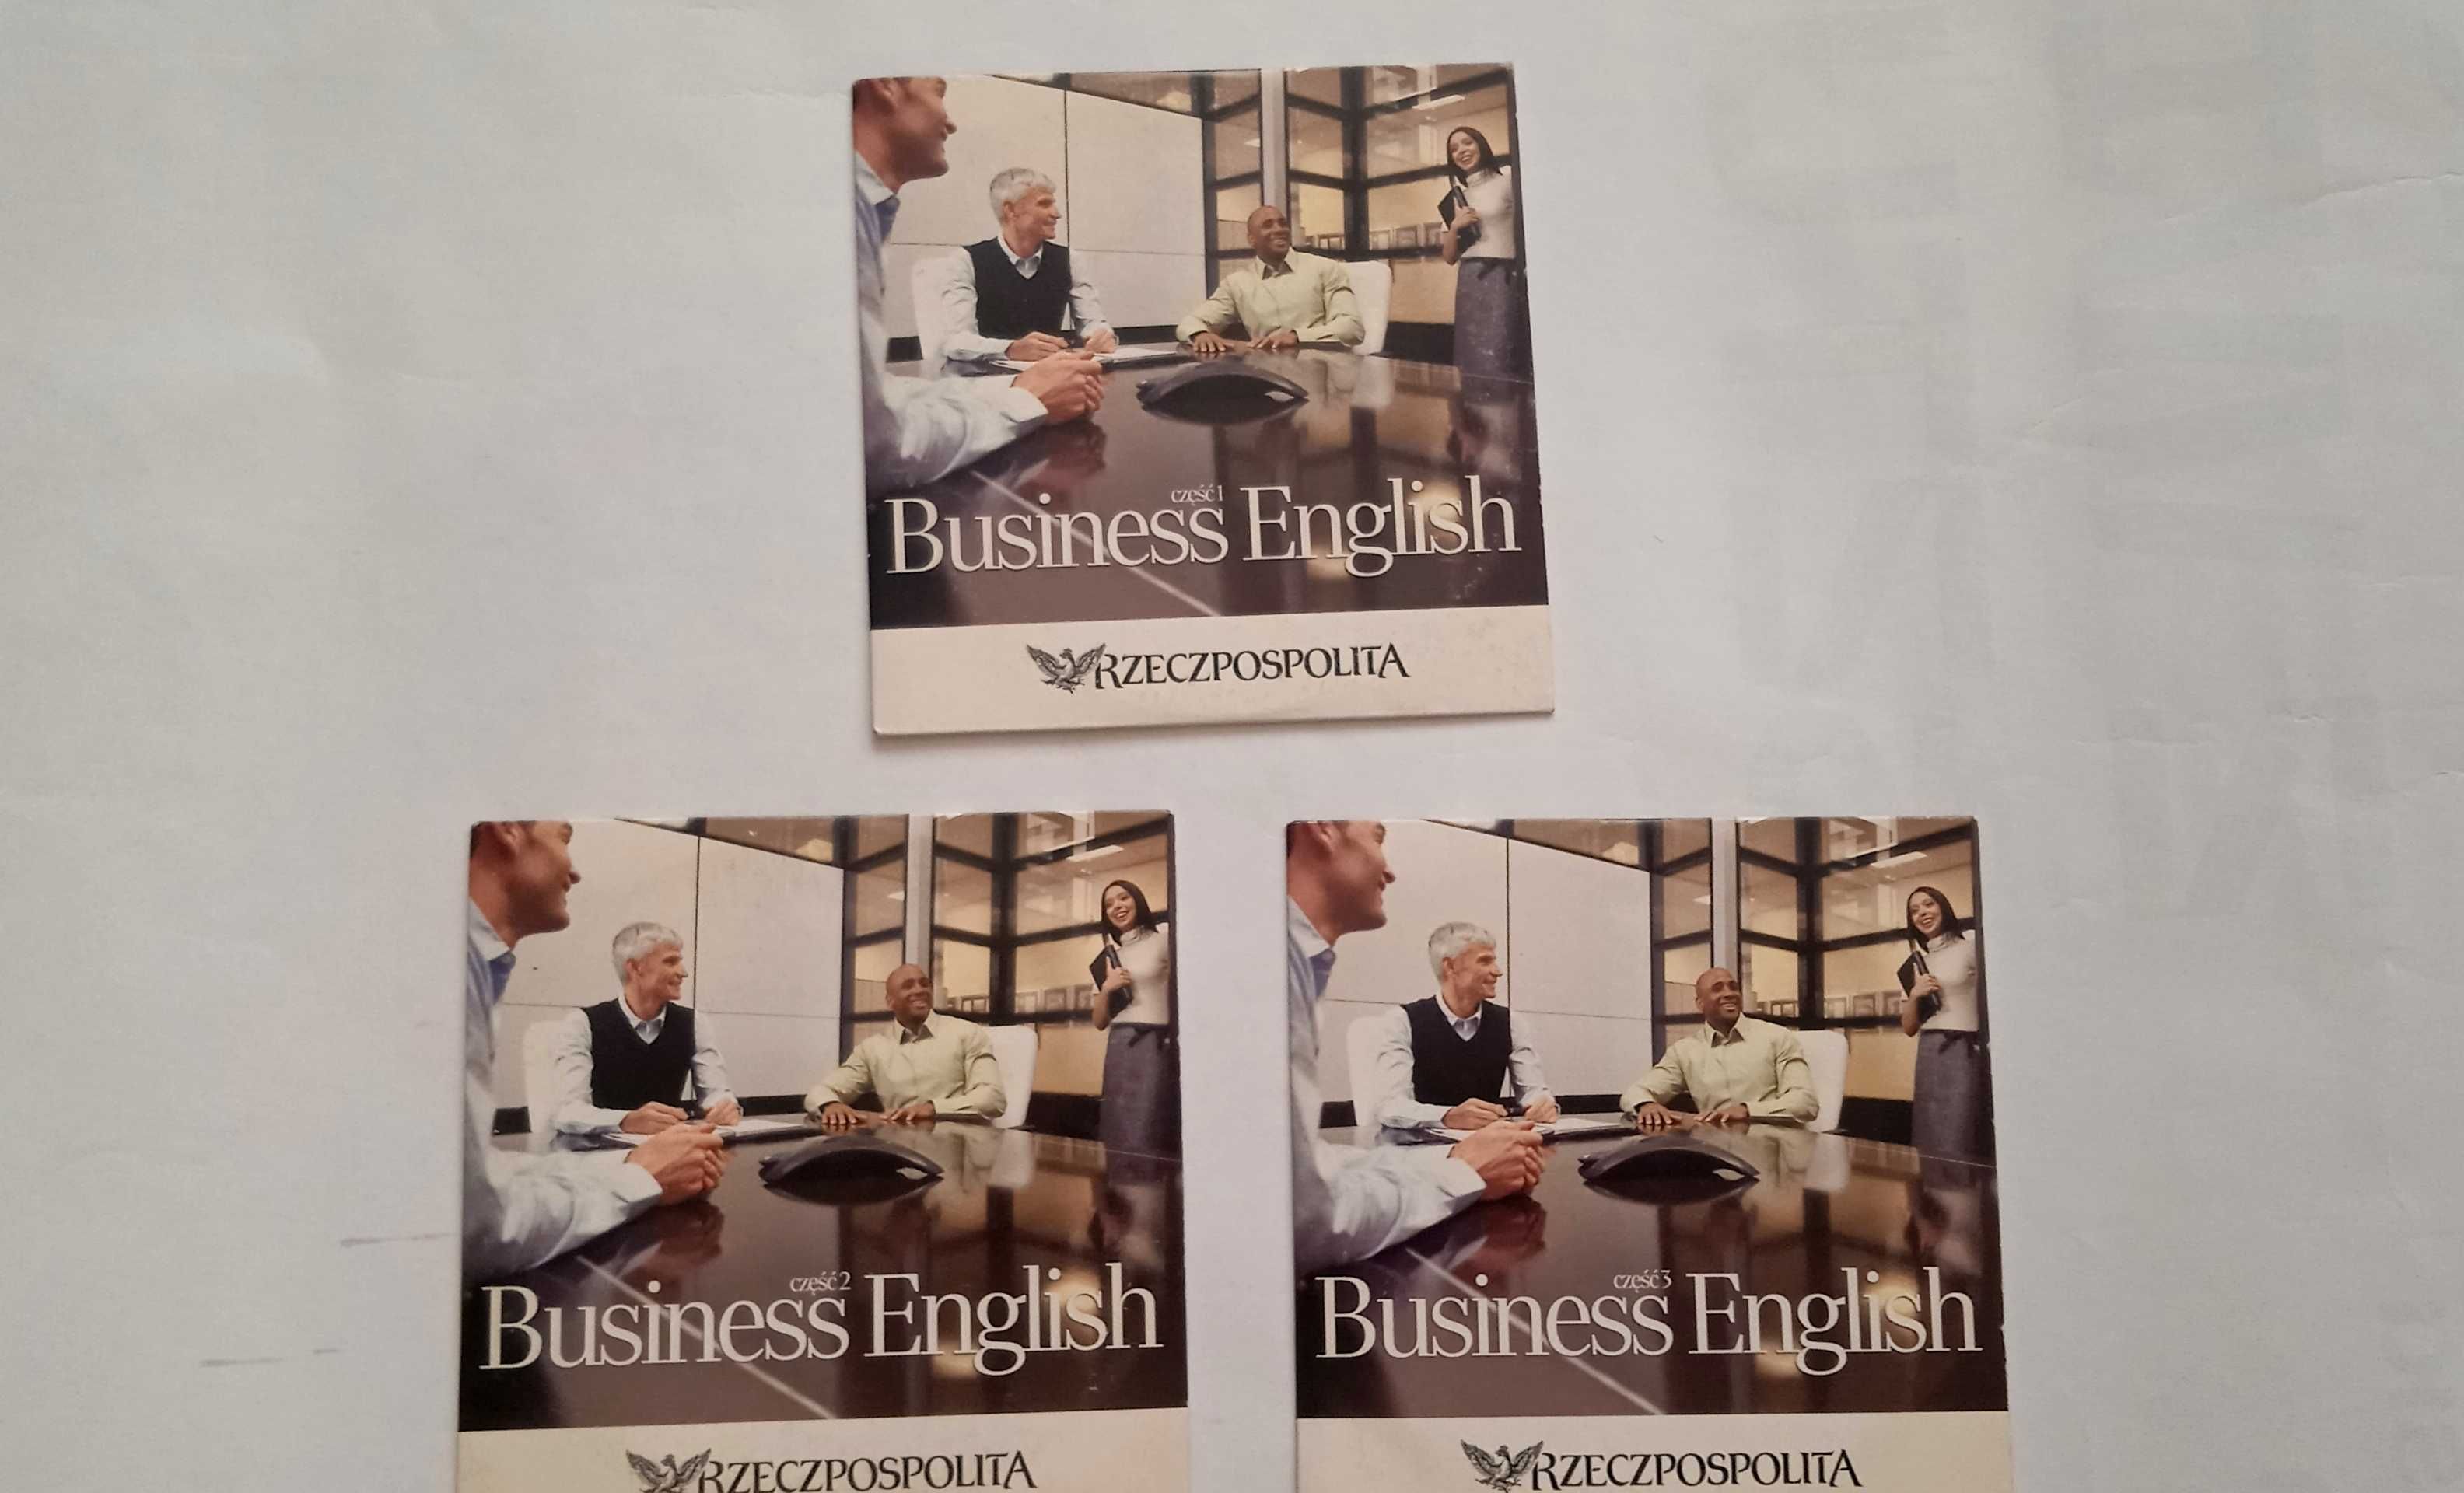 płyty cd "Business English"